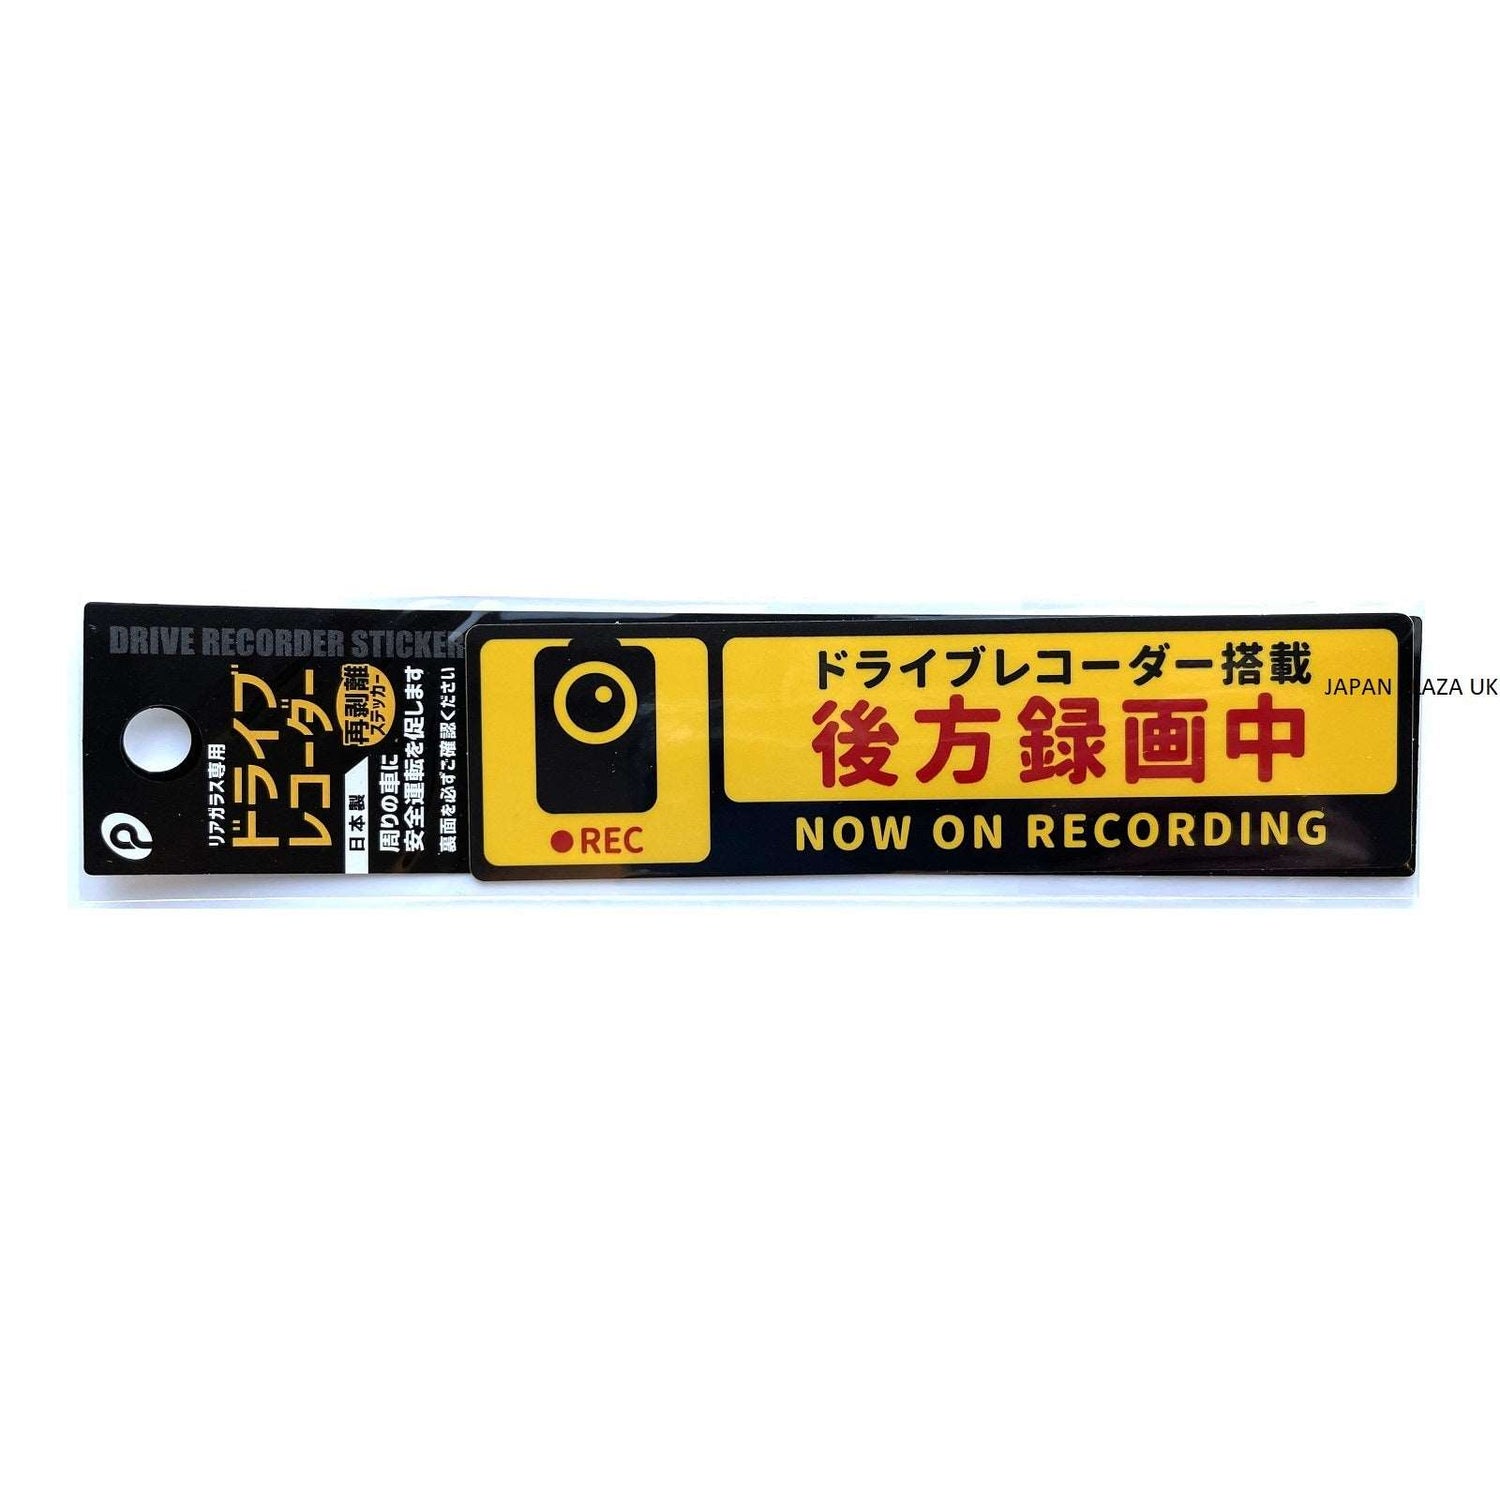 Car Camera Recording Sticker 12.6 x 3.4 cm (Made in Japan)